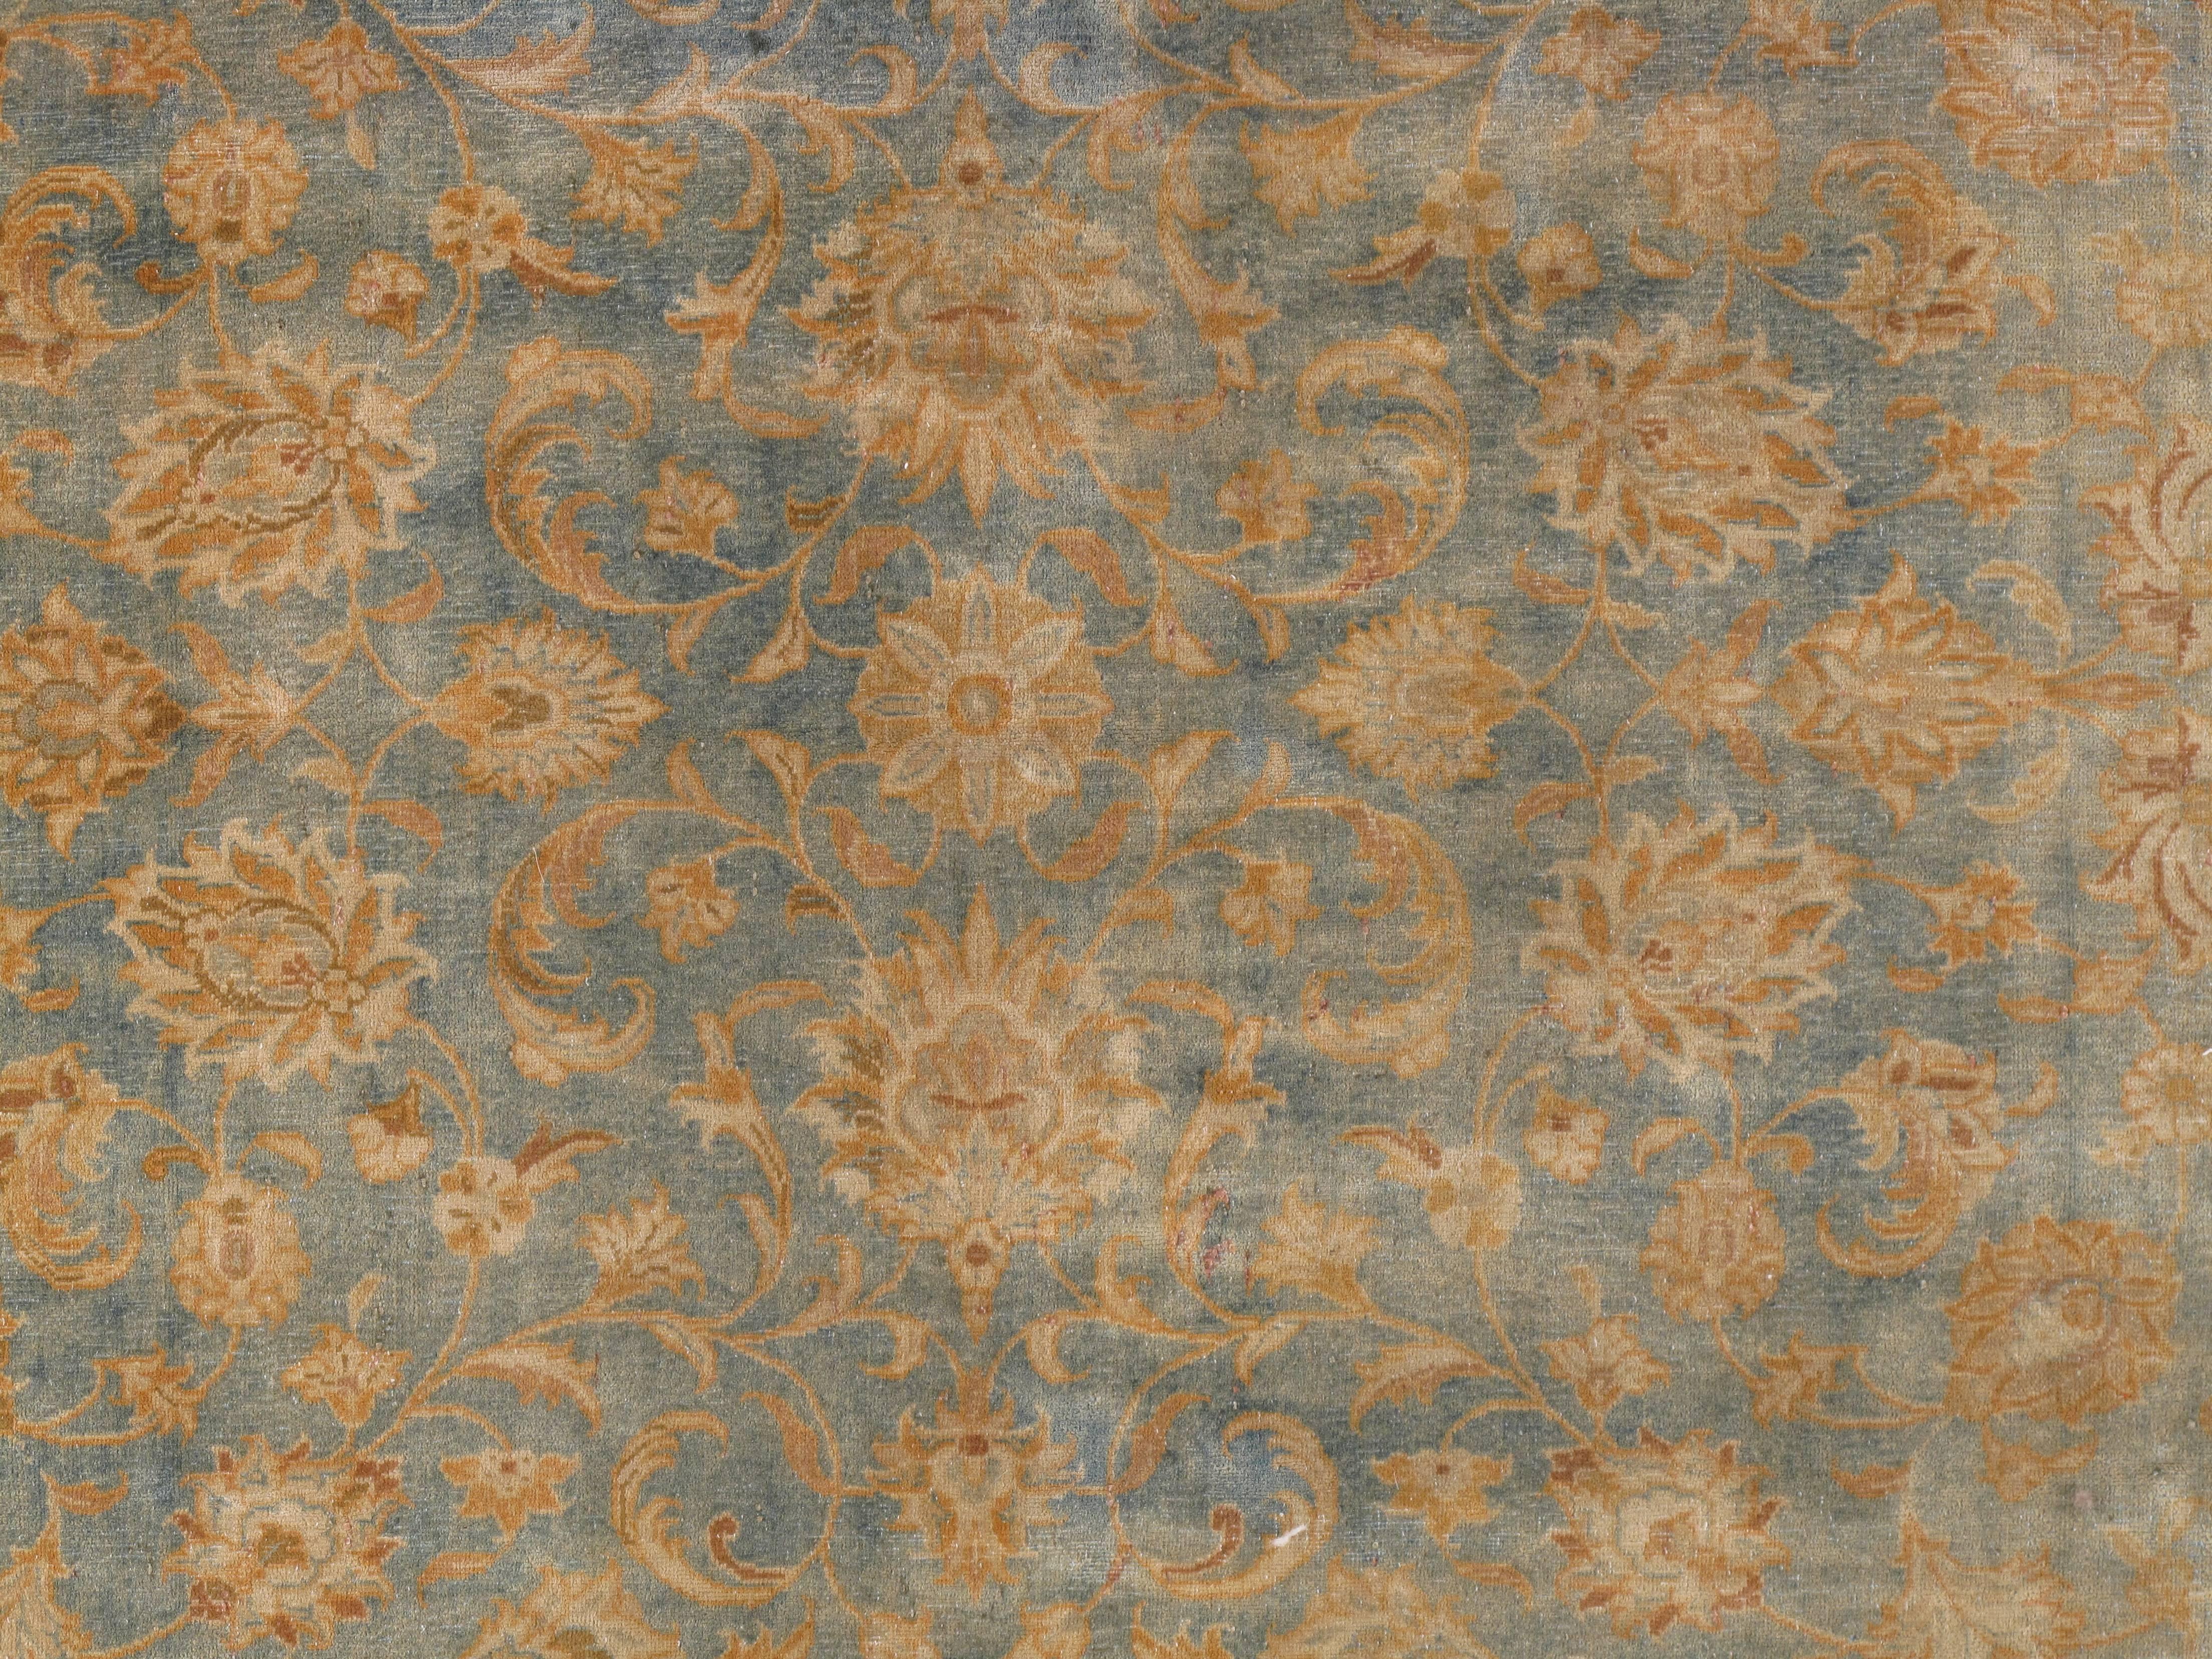 Hand-Knotted Antique Kerman Carpet, Allover Persian Handmade Carpet, Light blue, Ivory, Peach